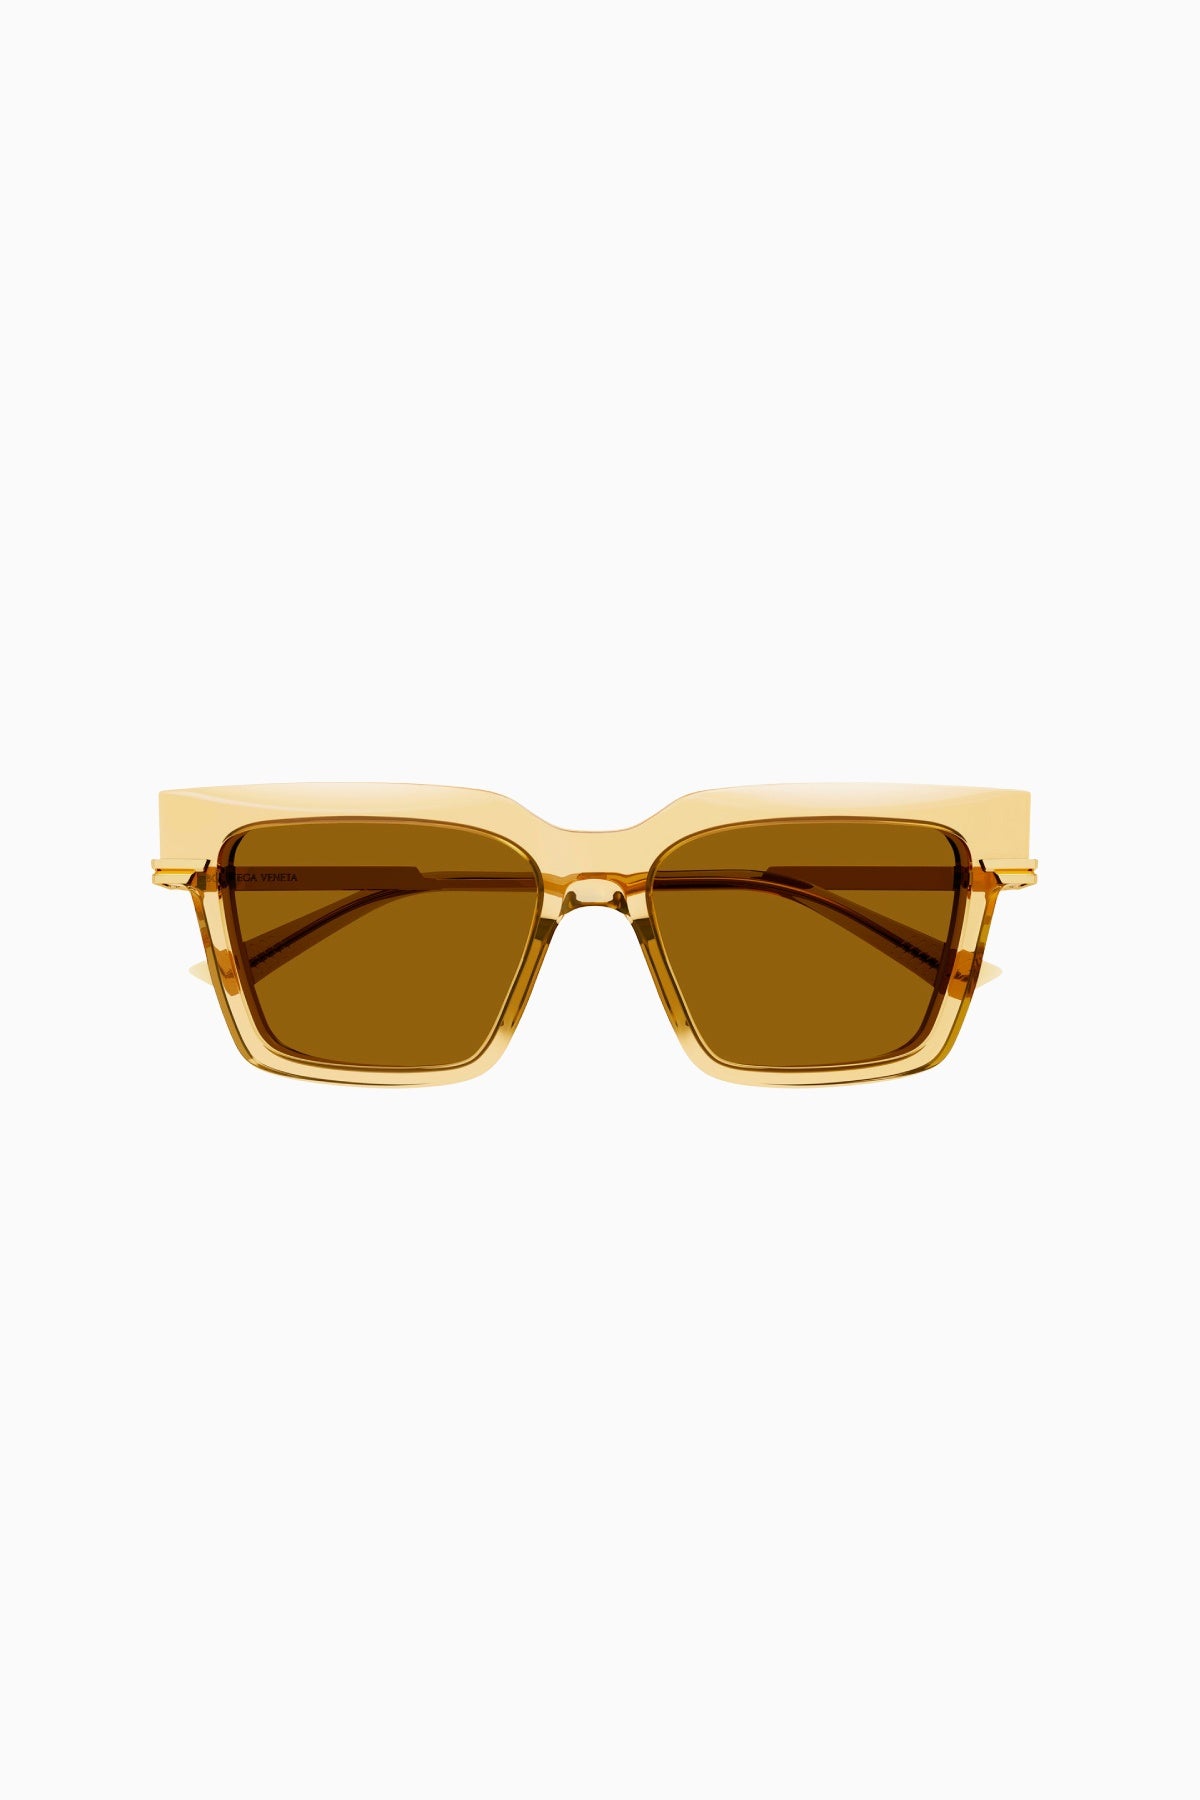 Bottega Veneta Square Framed Sunglasses - Yellow